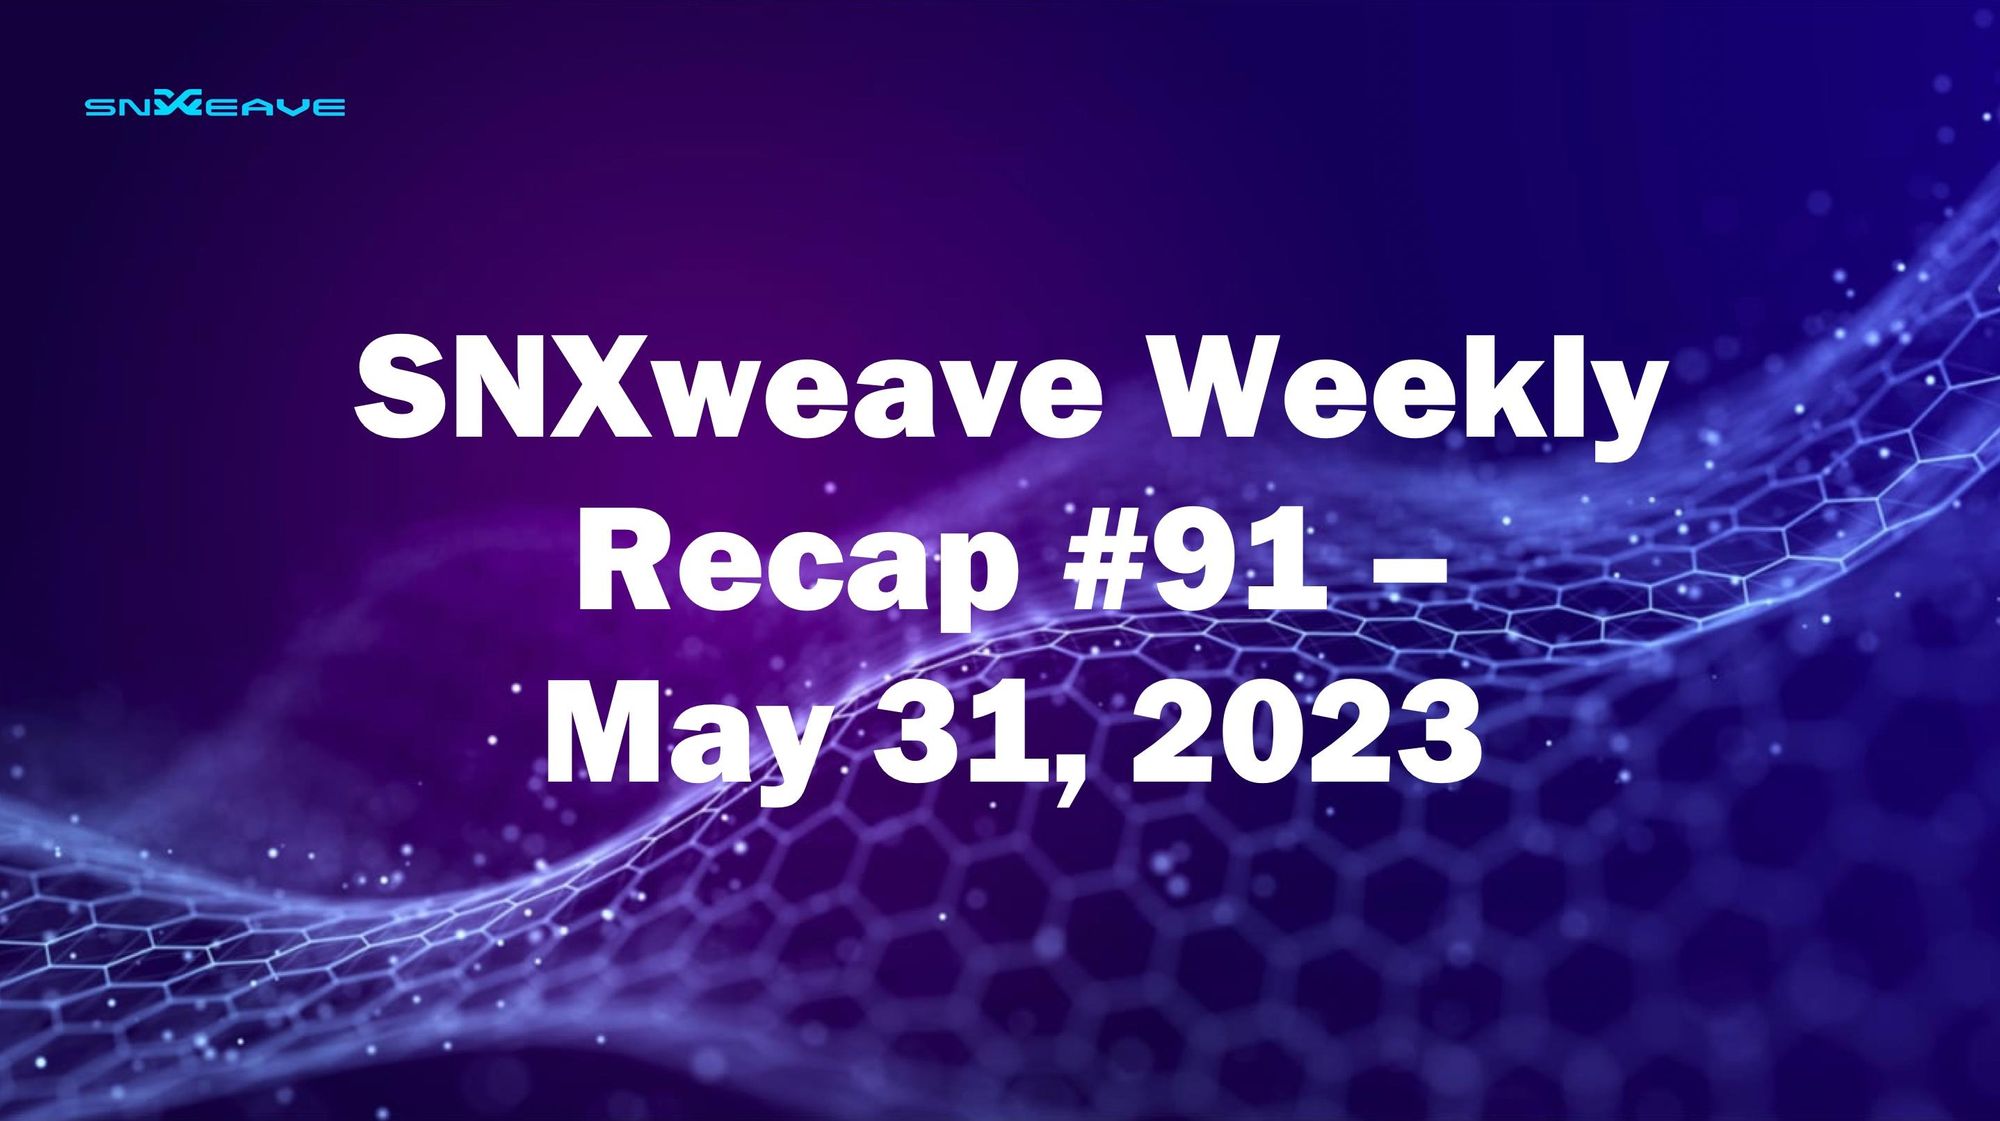 SNXweave Weekly Recap 91